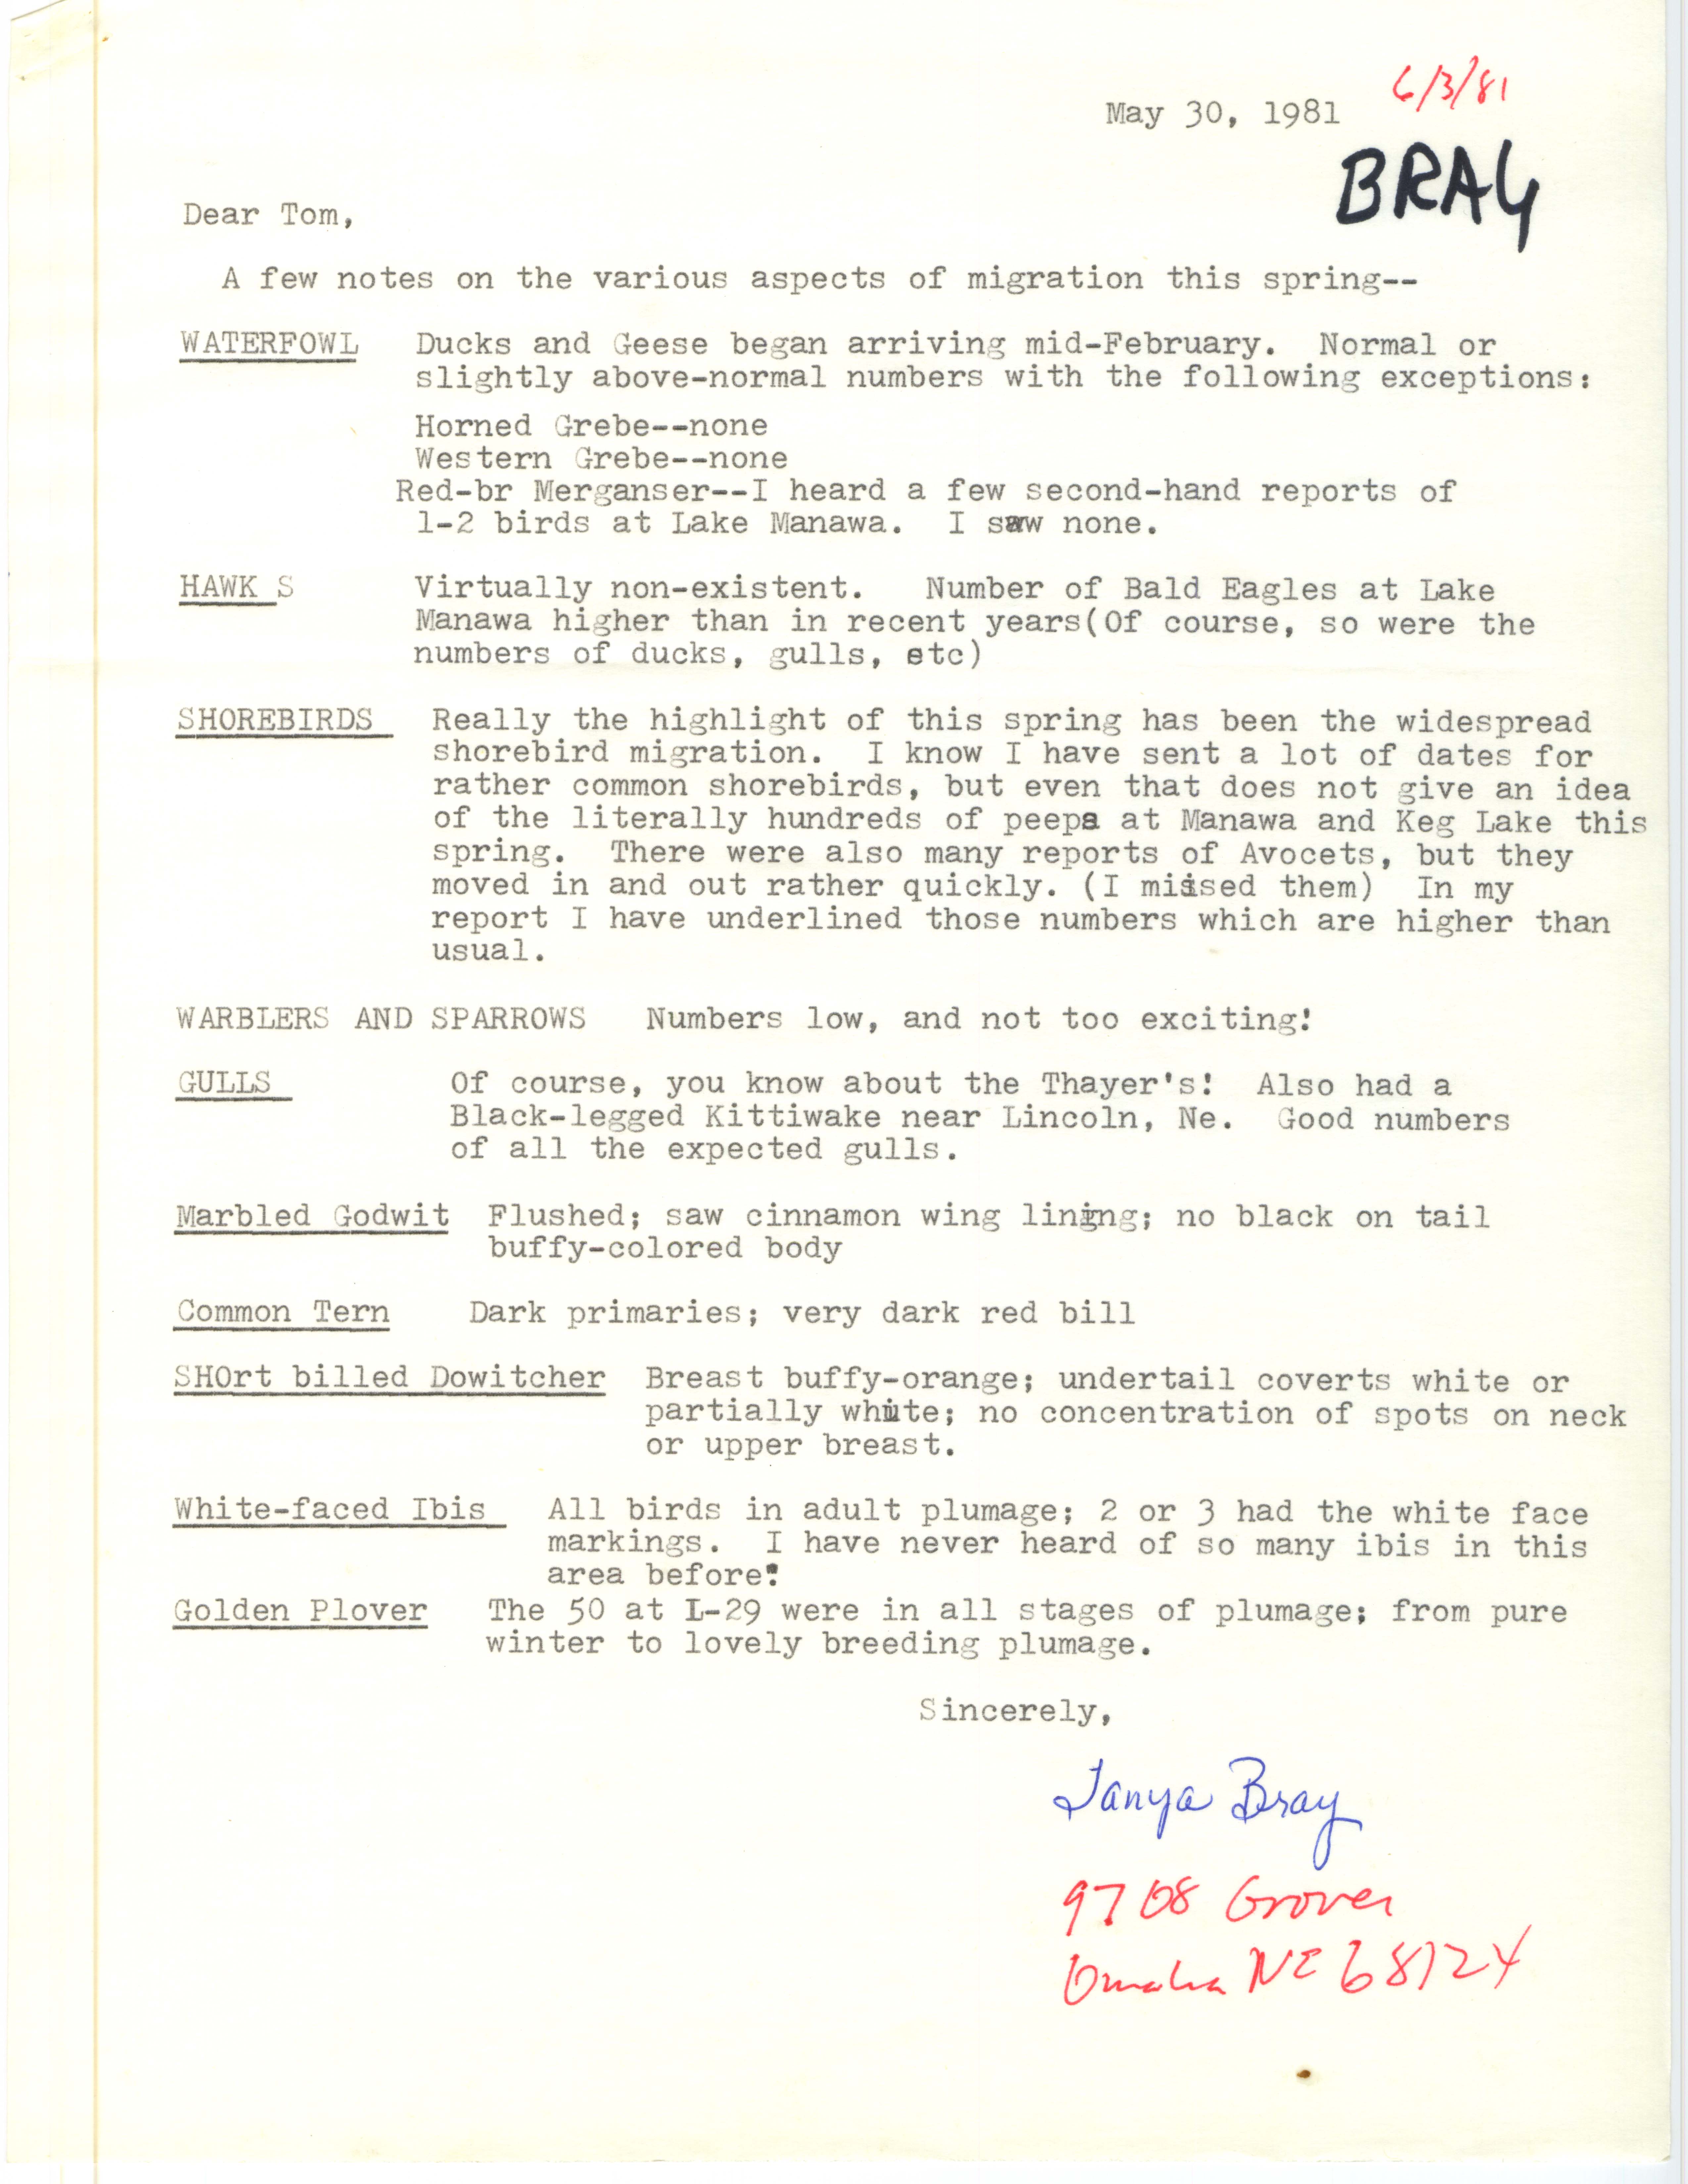 Tanya Bray letter to Thomas Kent regarding spring migration, May 30, 1981